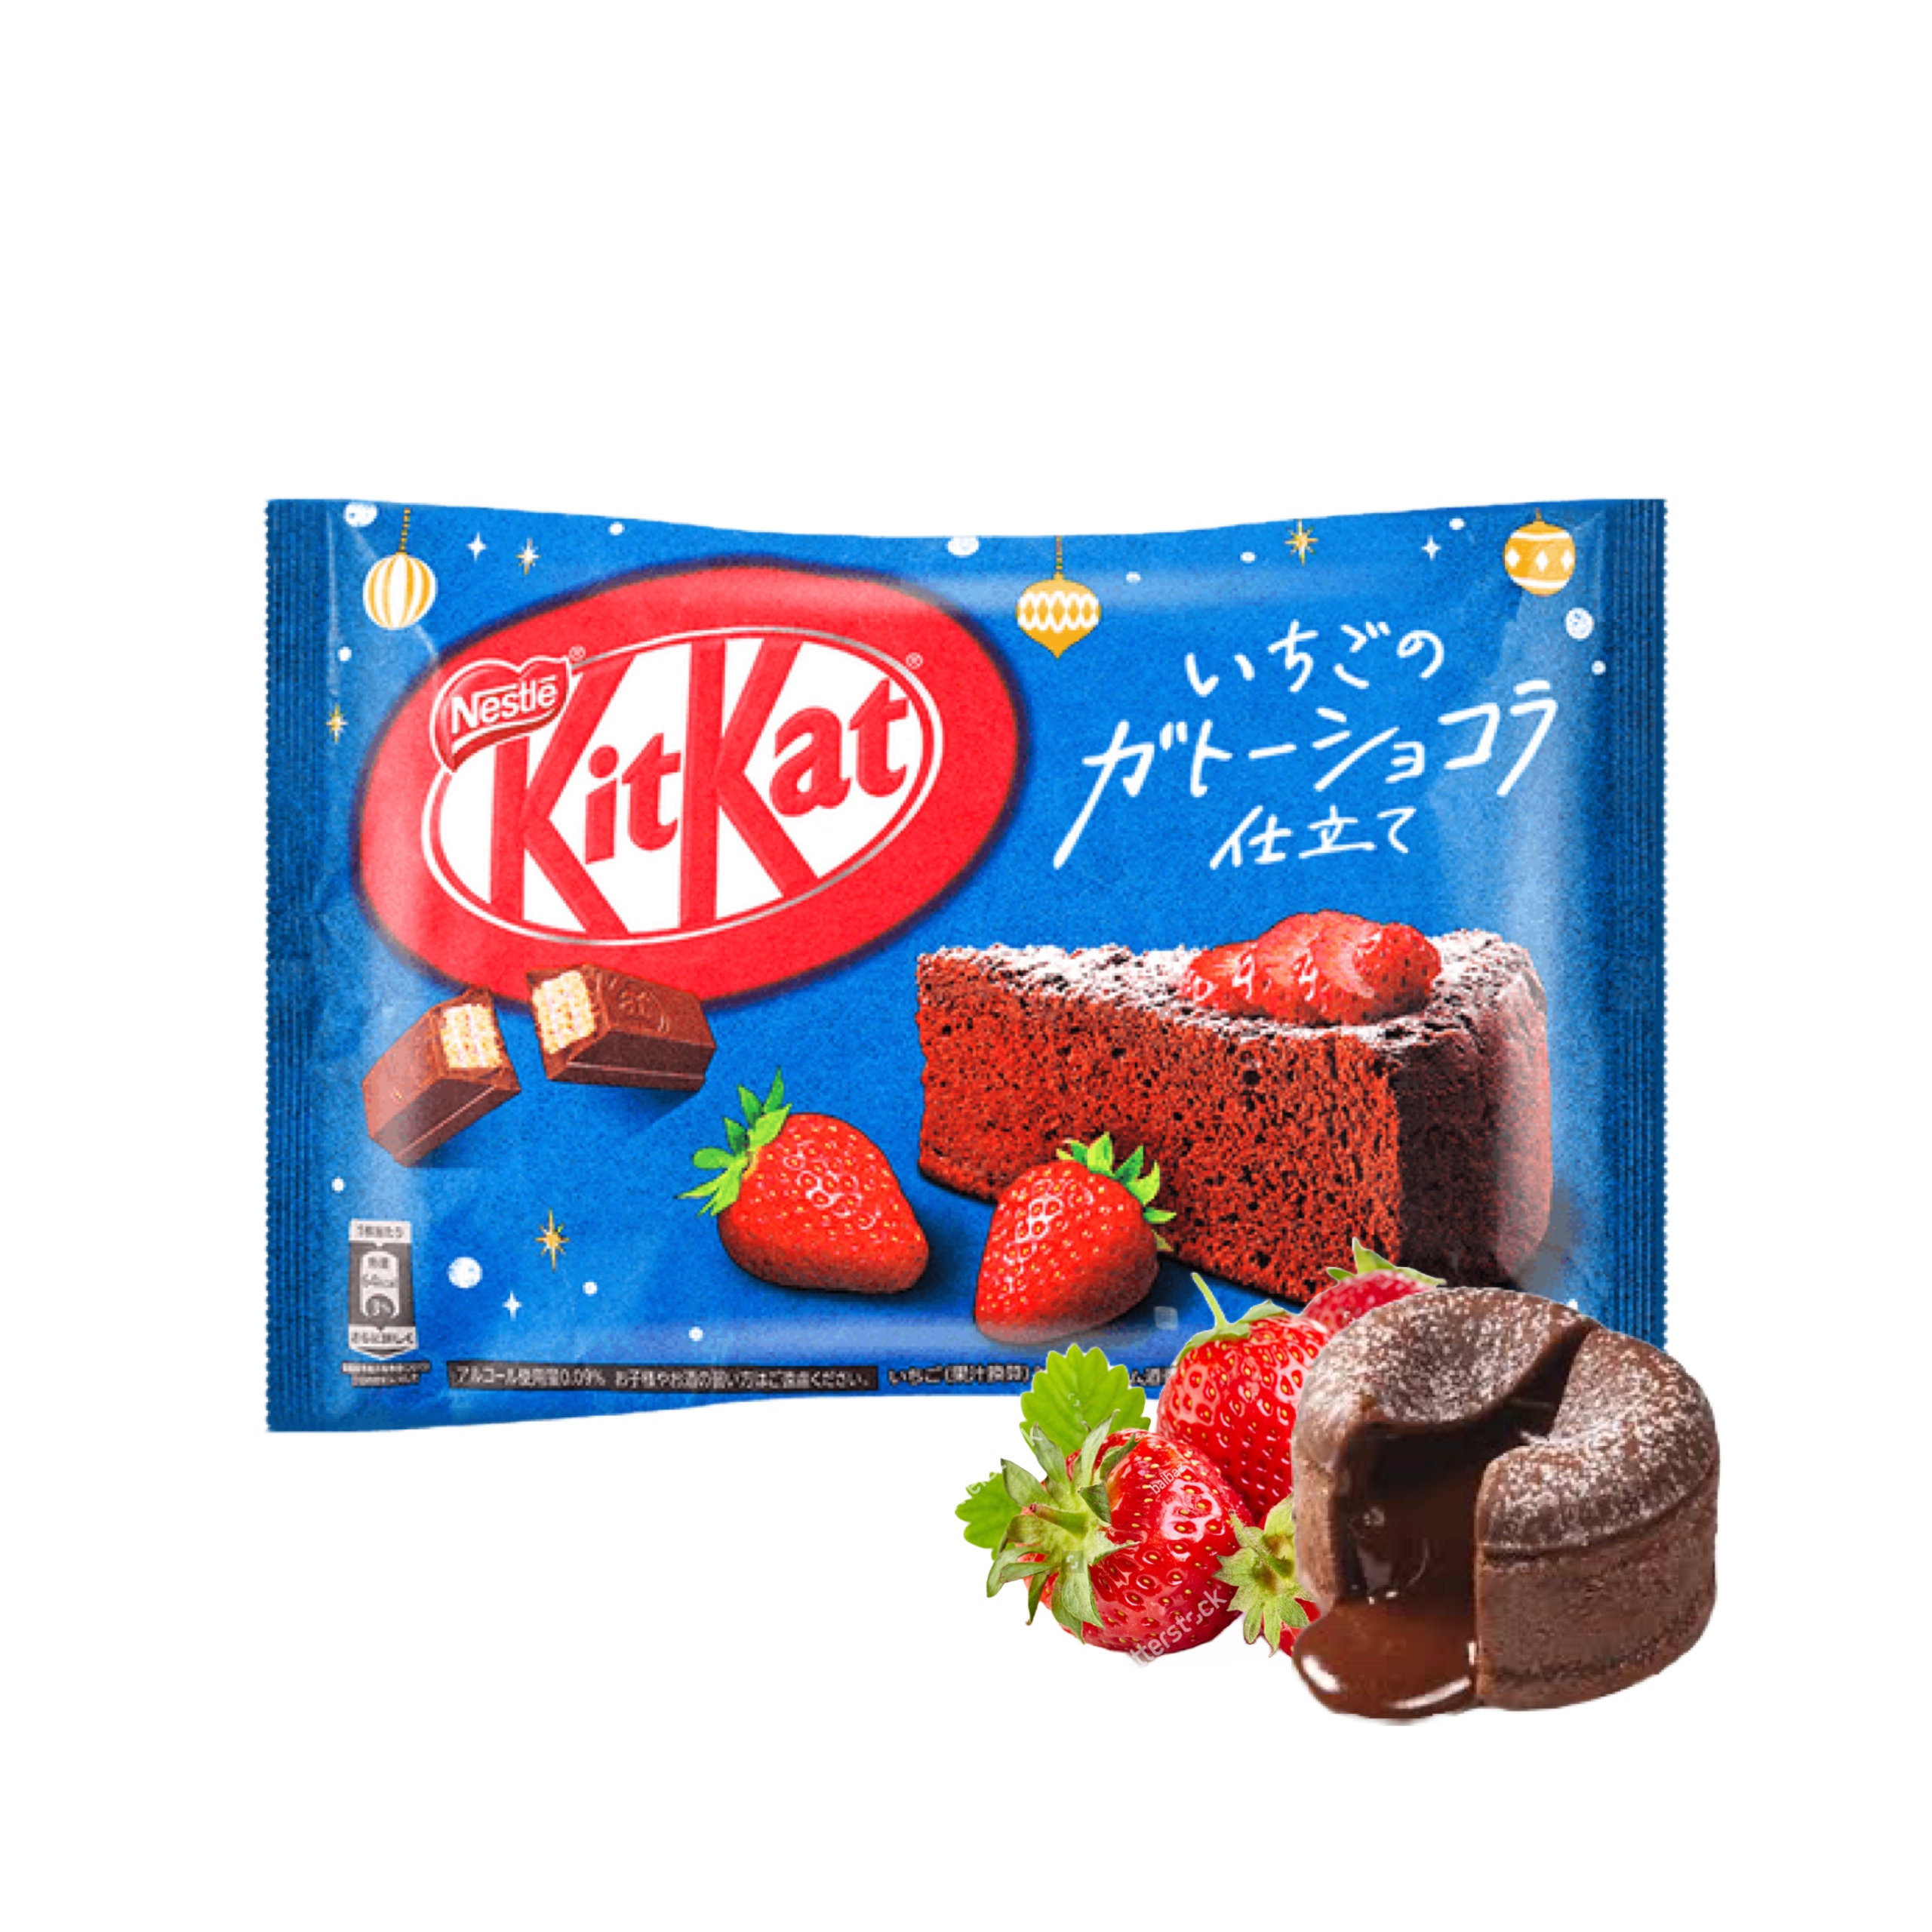 NEW Japanese Kitkat Strawberry Gateau 1 10 Etsy Finland